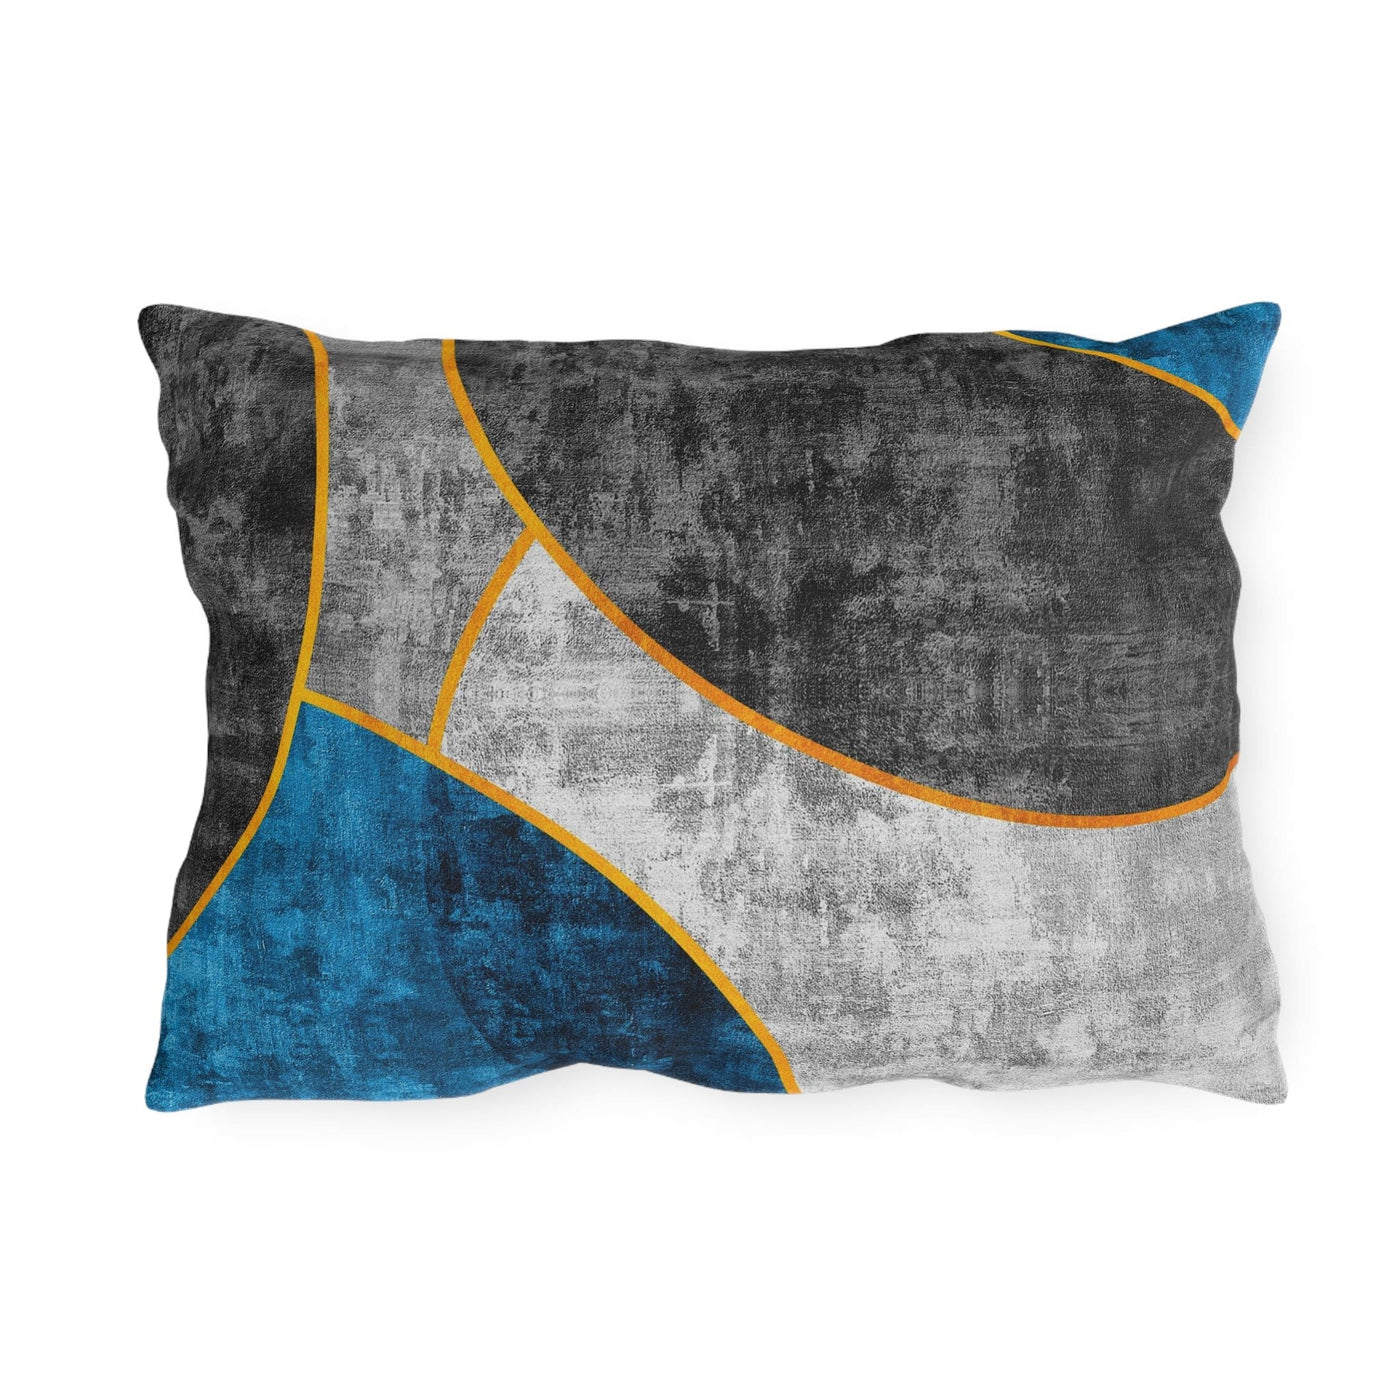 Decorative Outdoor Pillows With Zipper - Set Of 2 Black Blue Grey Circular